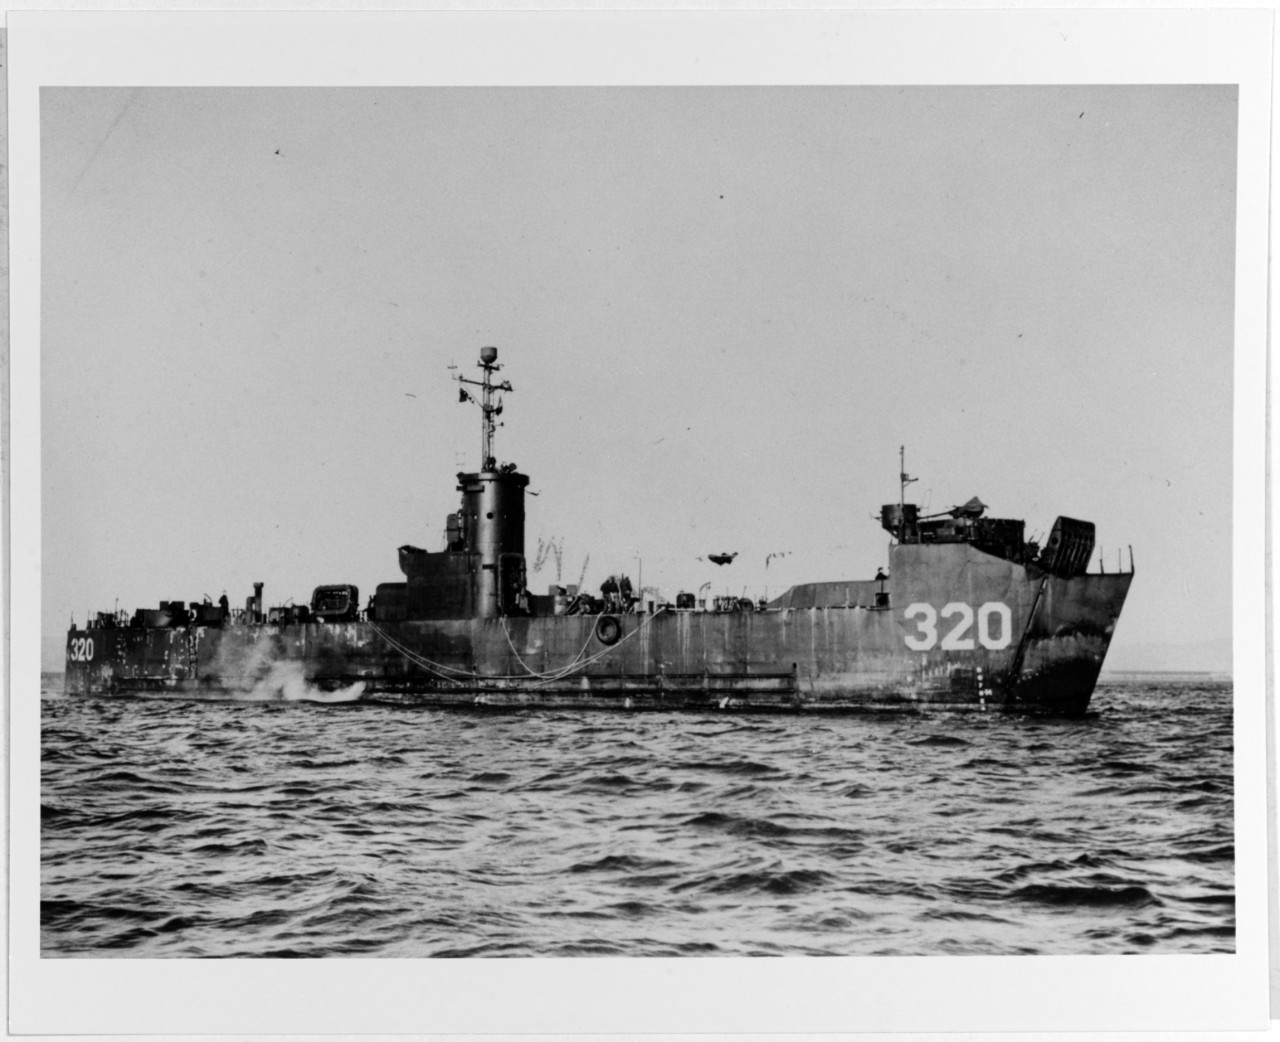 USS LSM-320